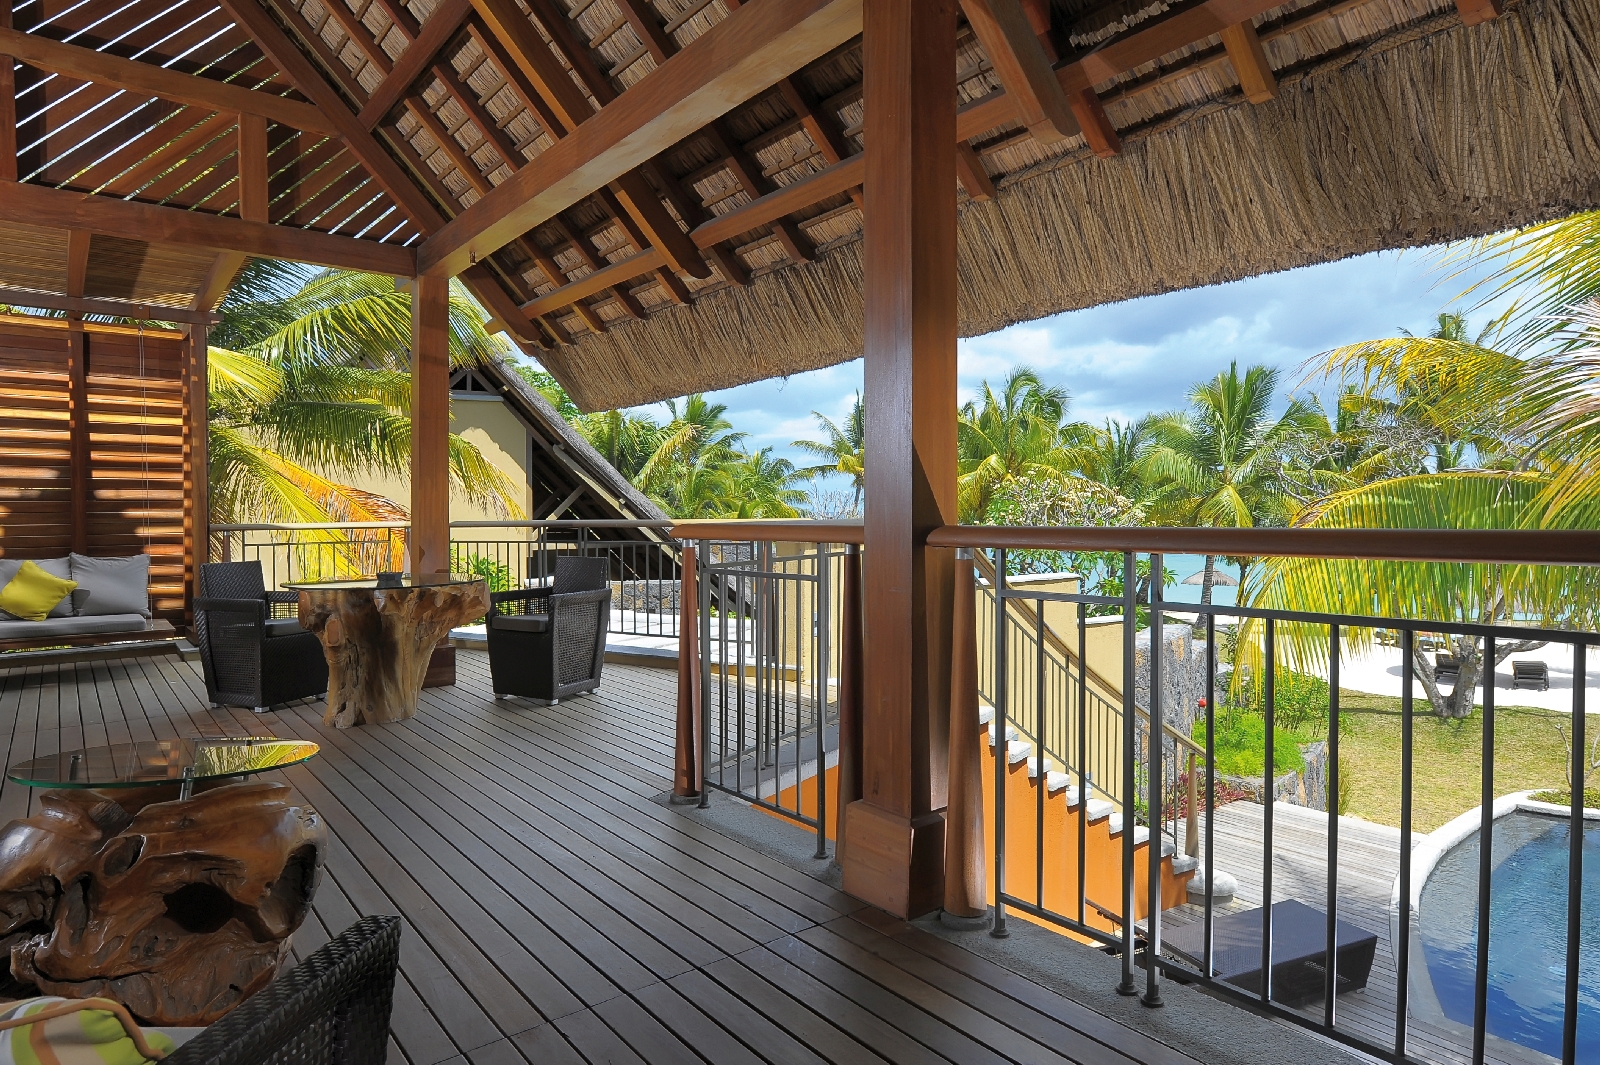 senior suite terrace at Royal Palm, Mauritius